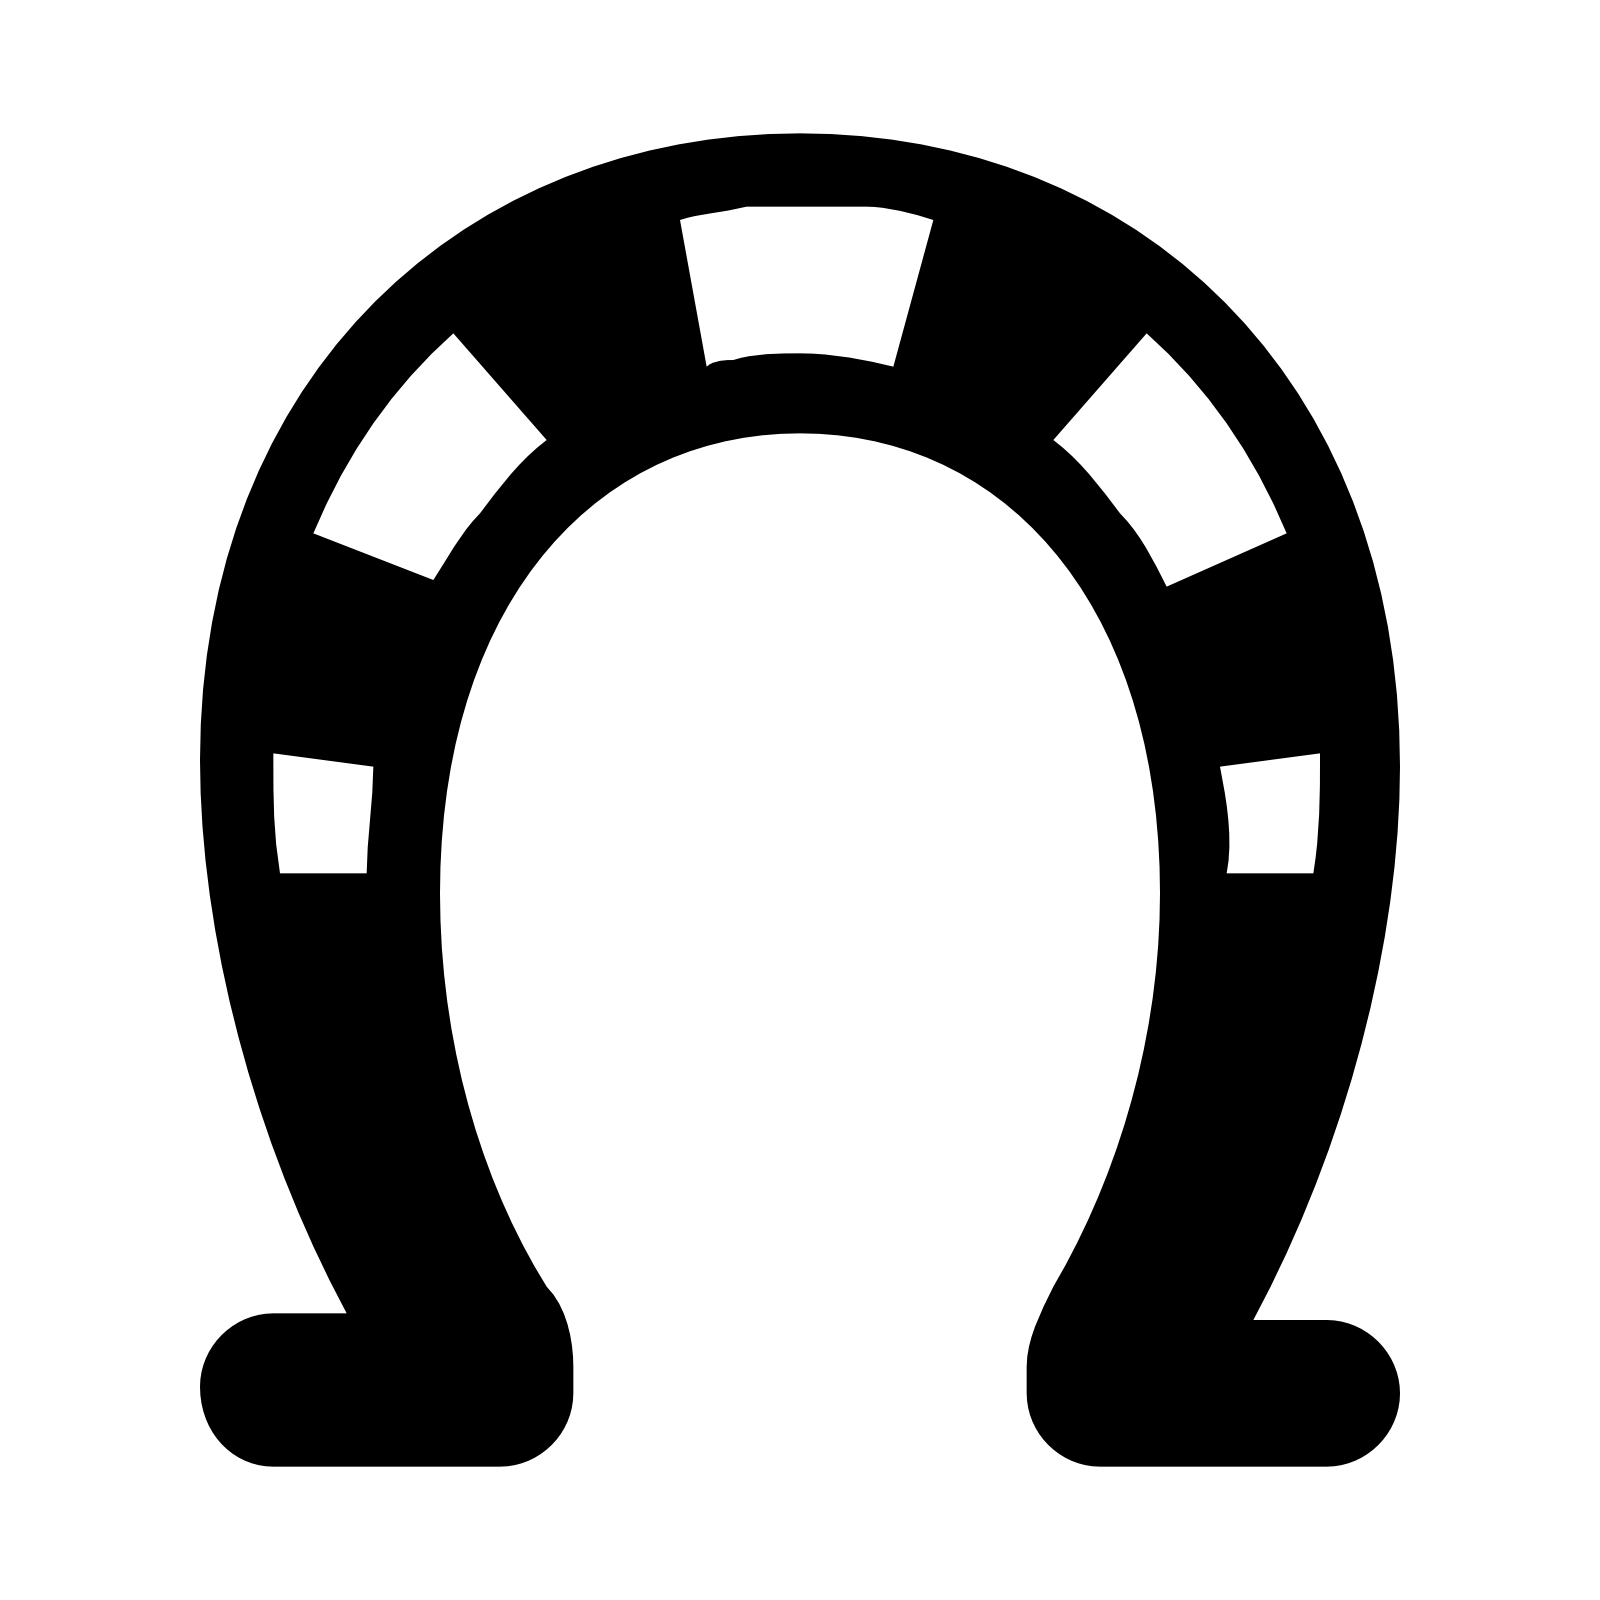 horseshoe game clipart black and white